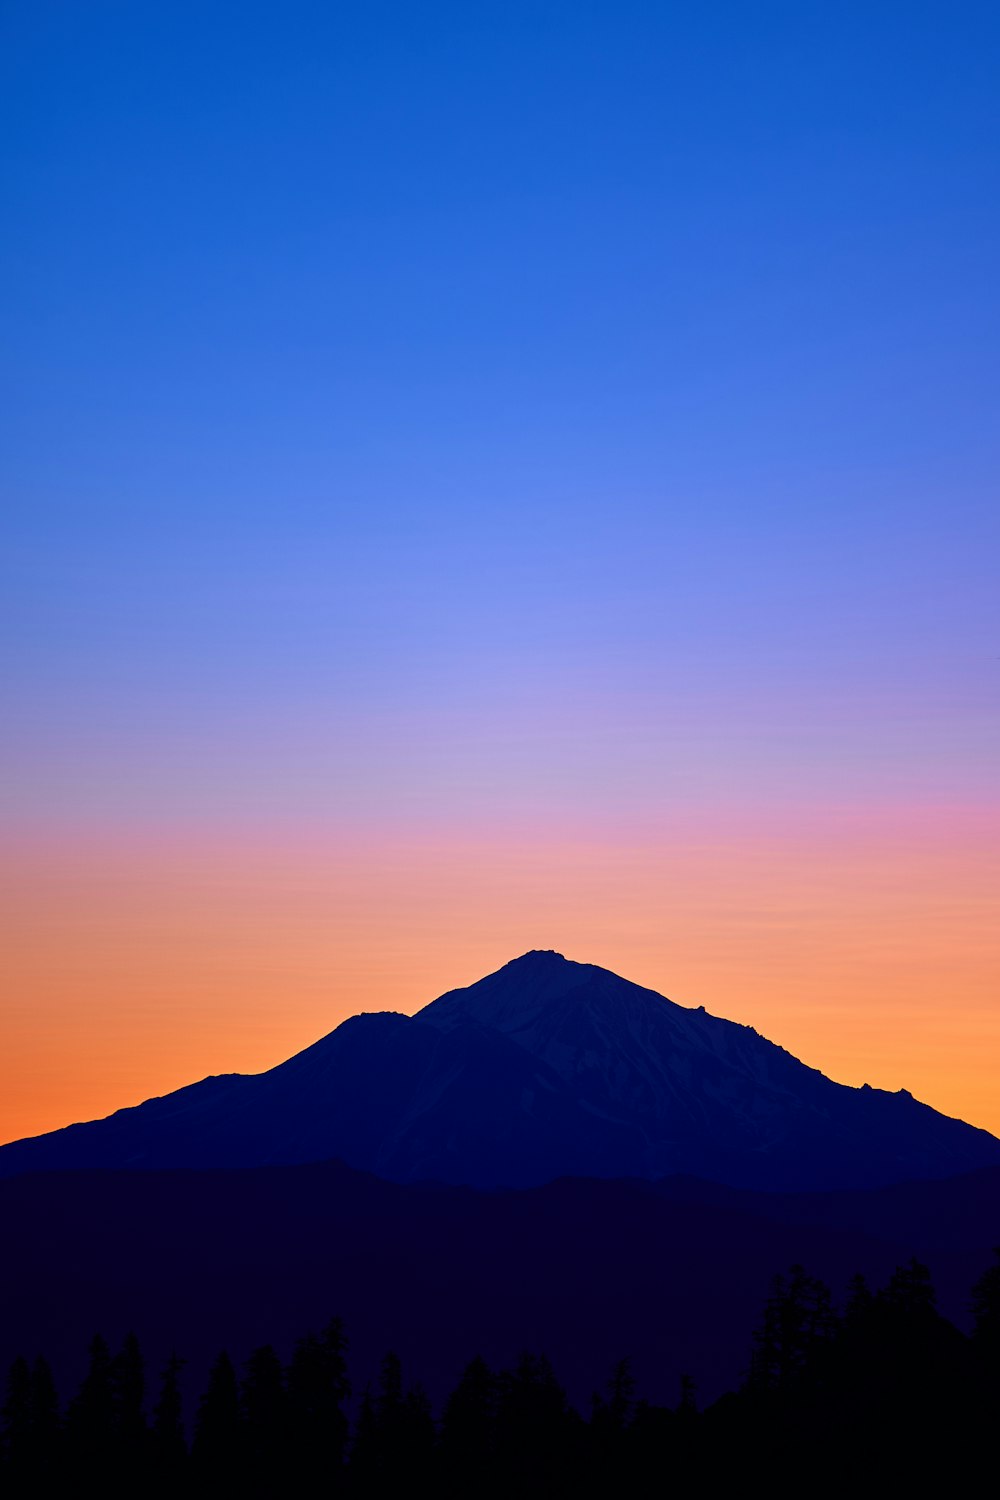 cone mountain under orange and blue sky